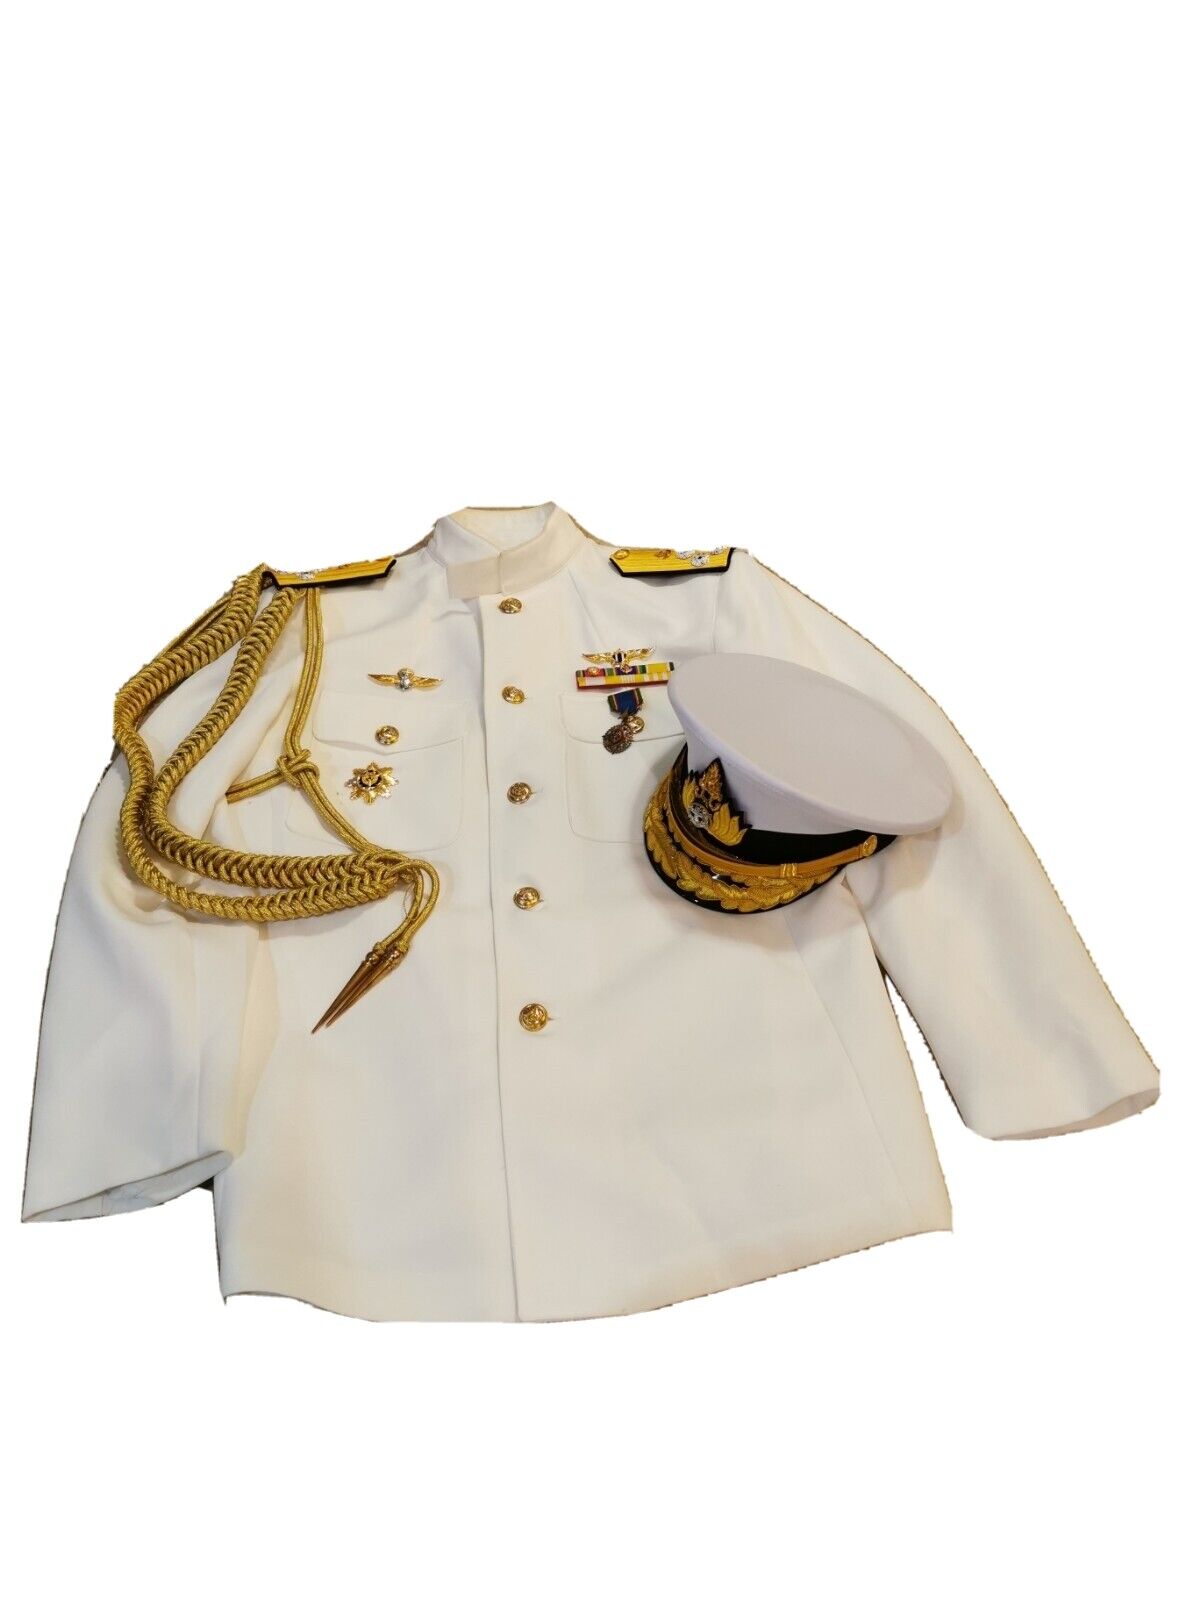 Royal Thai Navy Thailand White Uniform Admiral Cap Order Crown of Thailand Wings